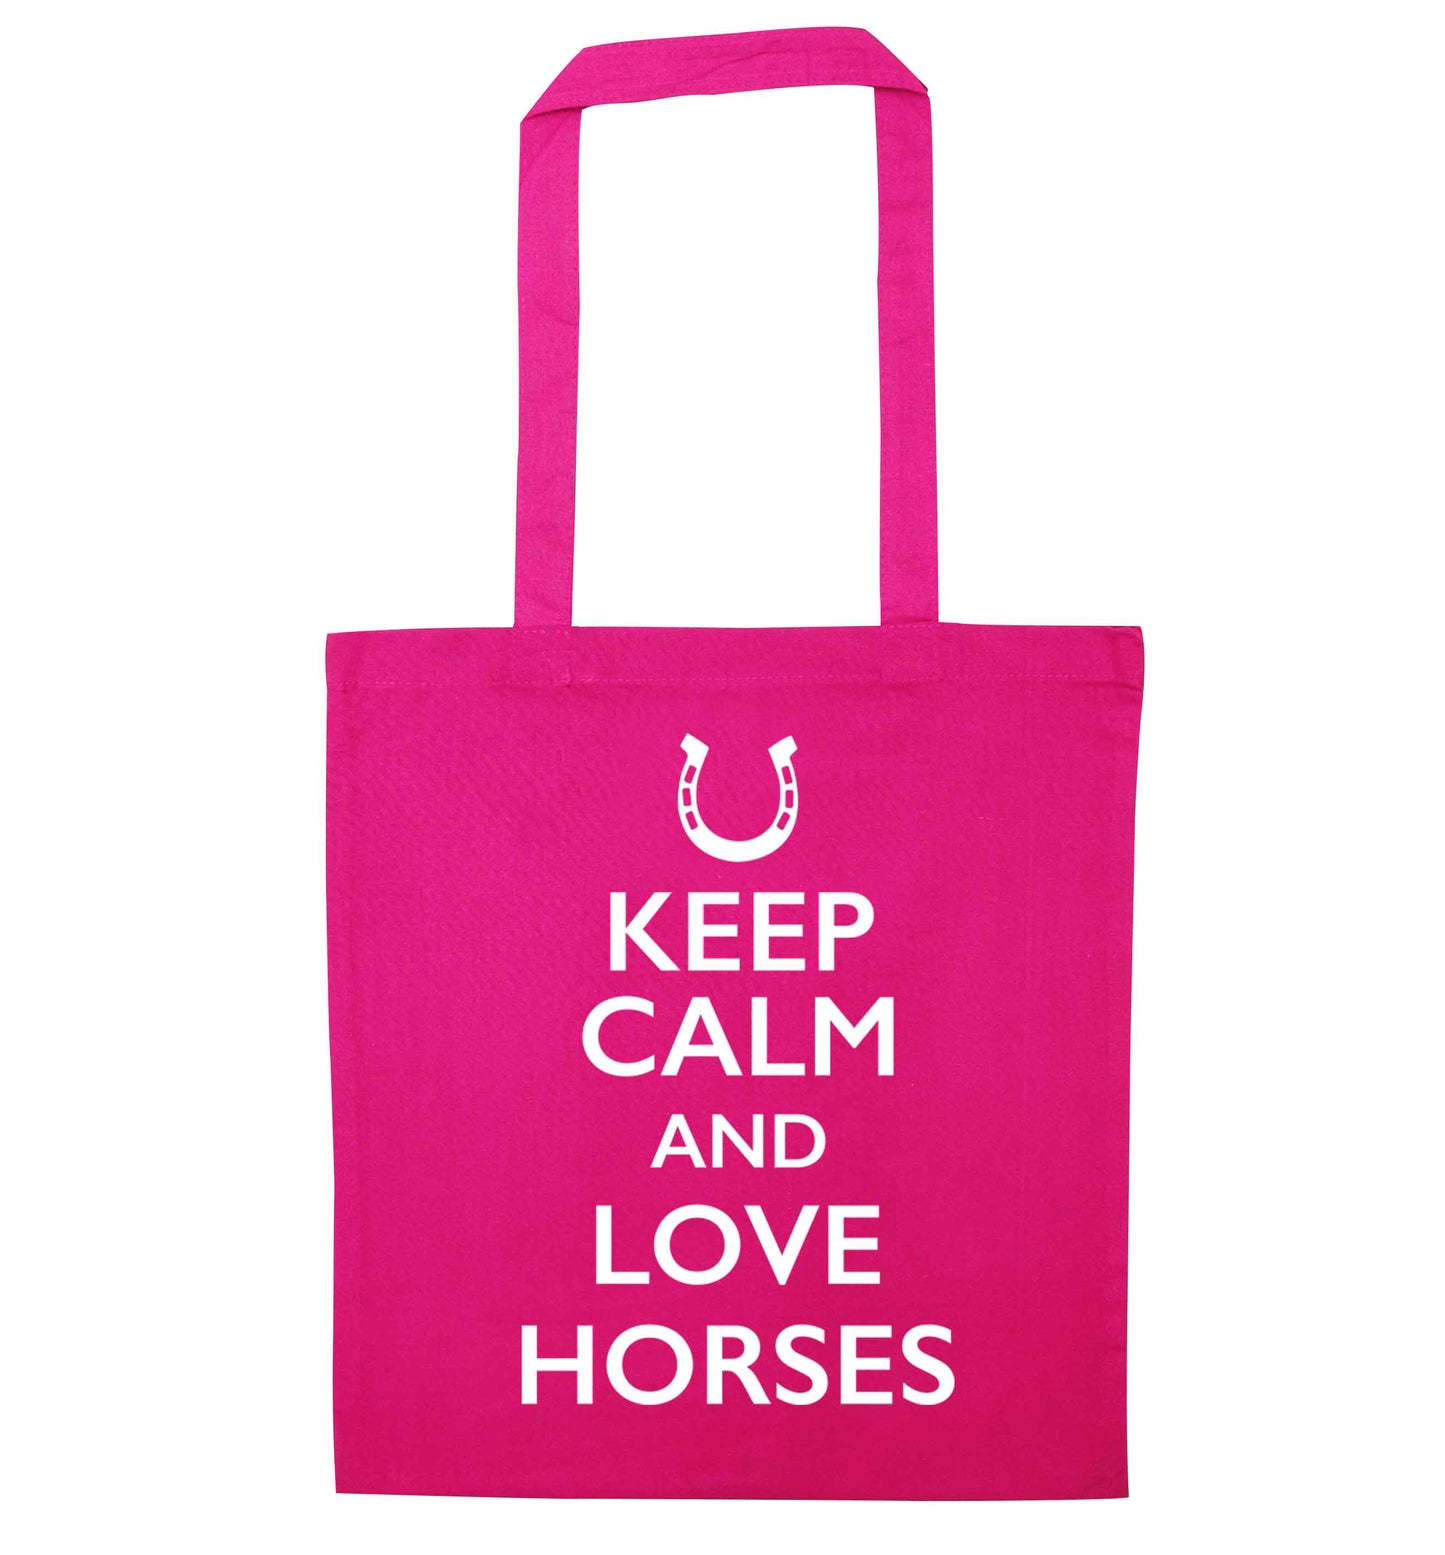 Keep calm and love horses pink tote bag